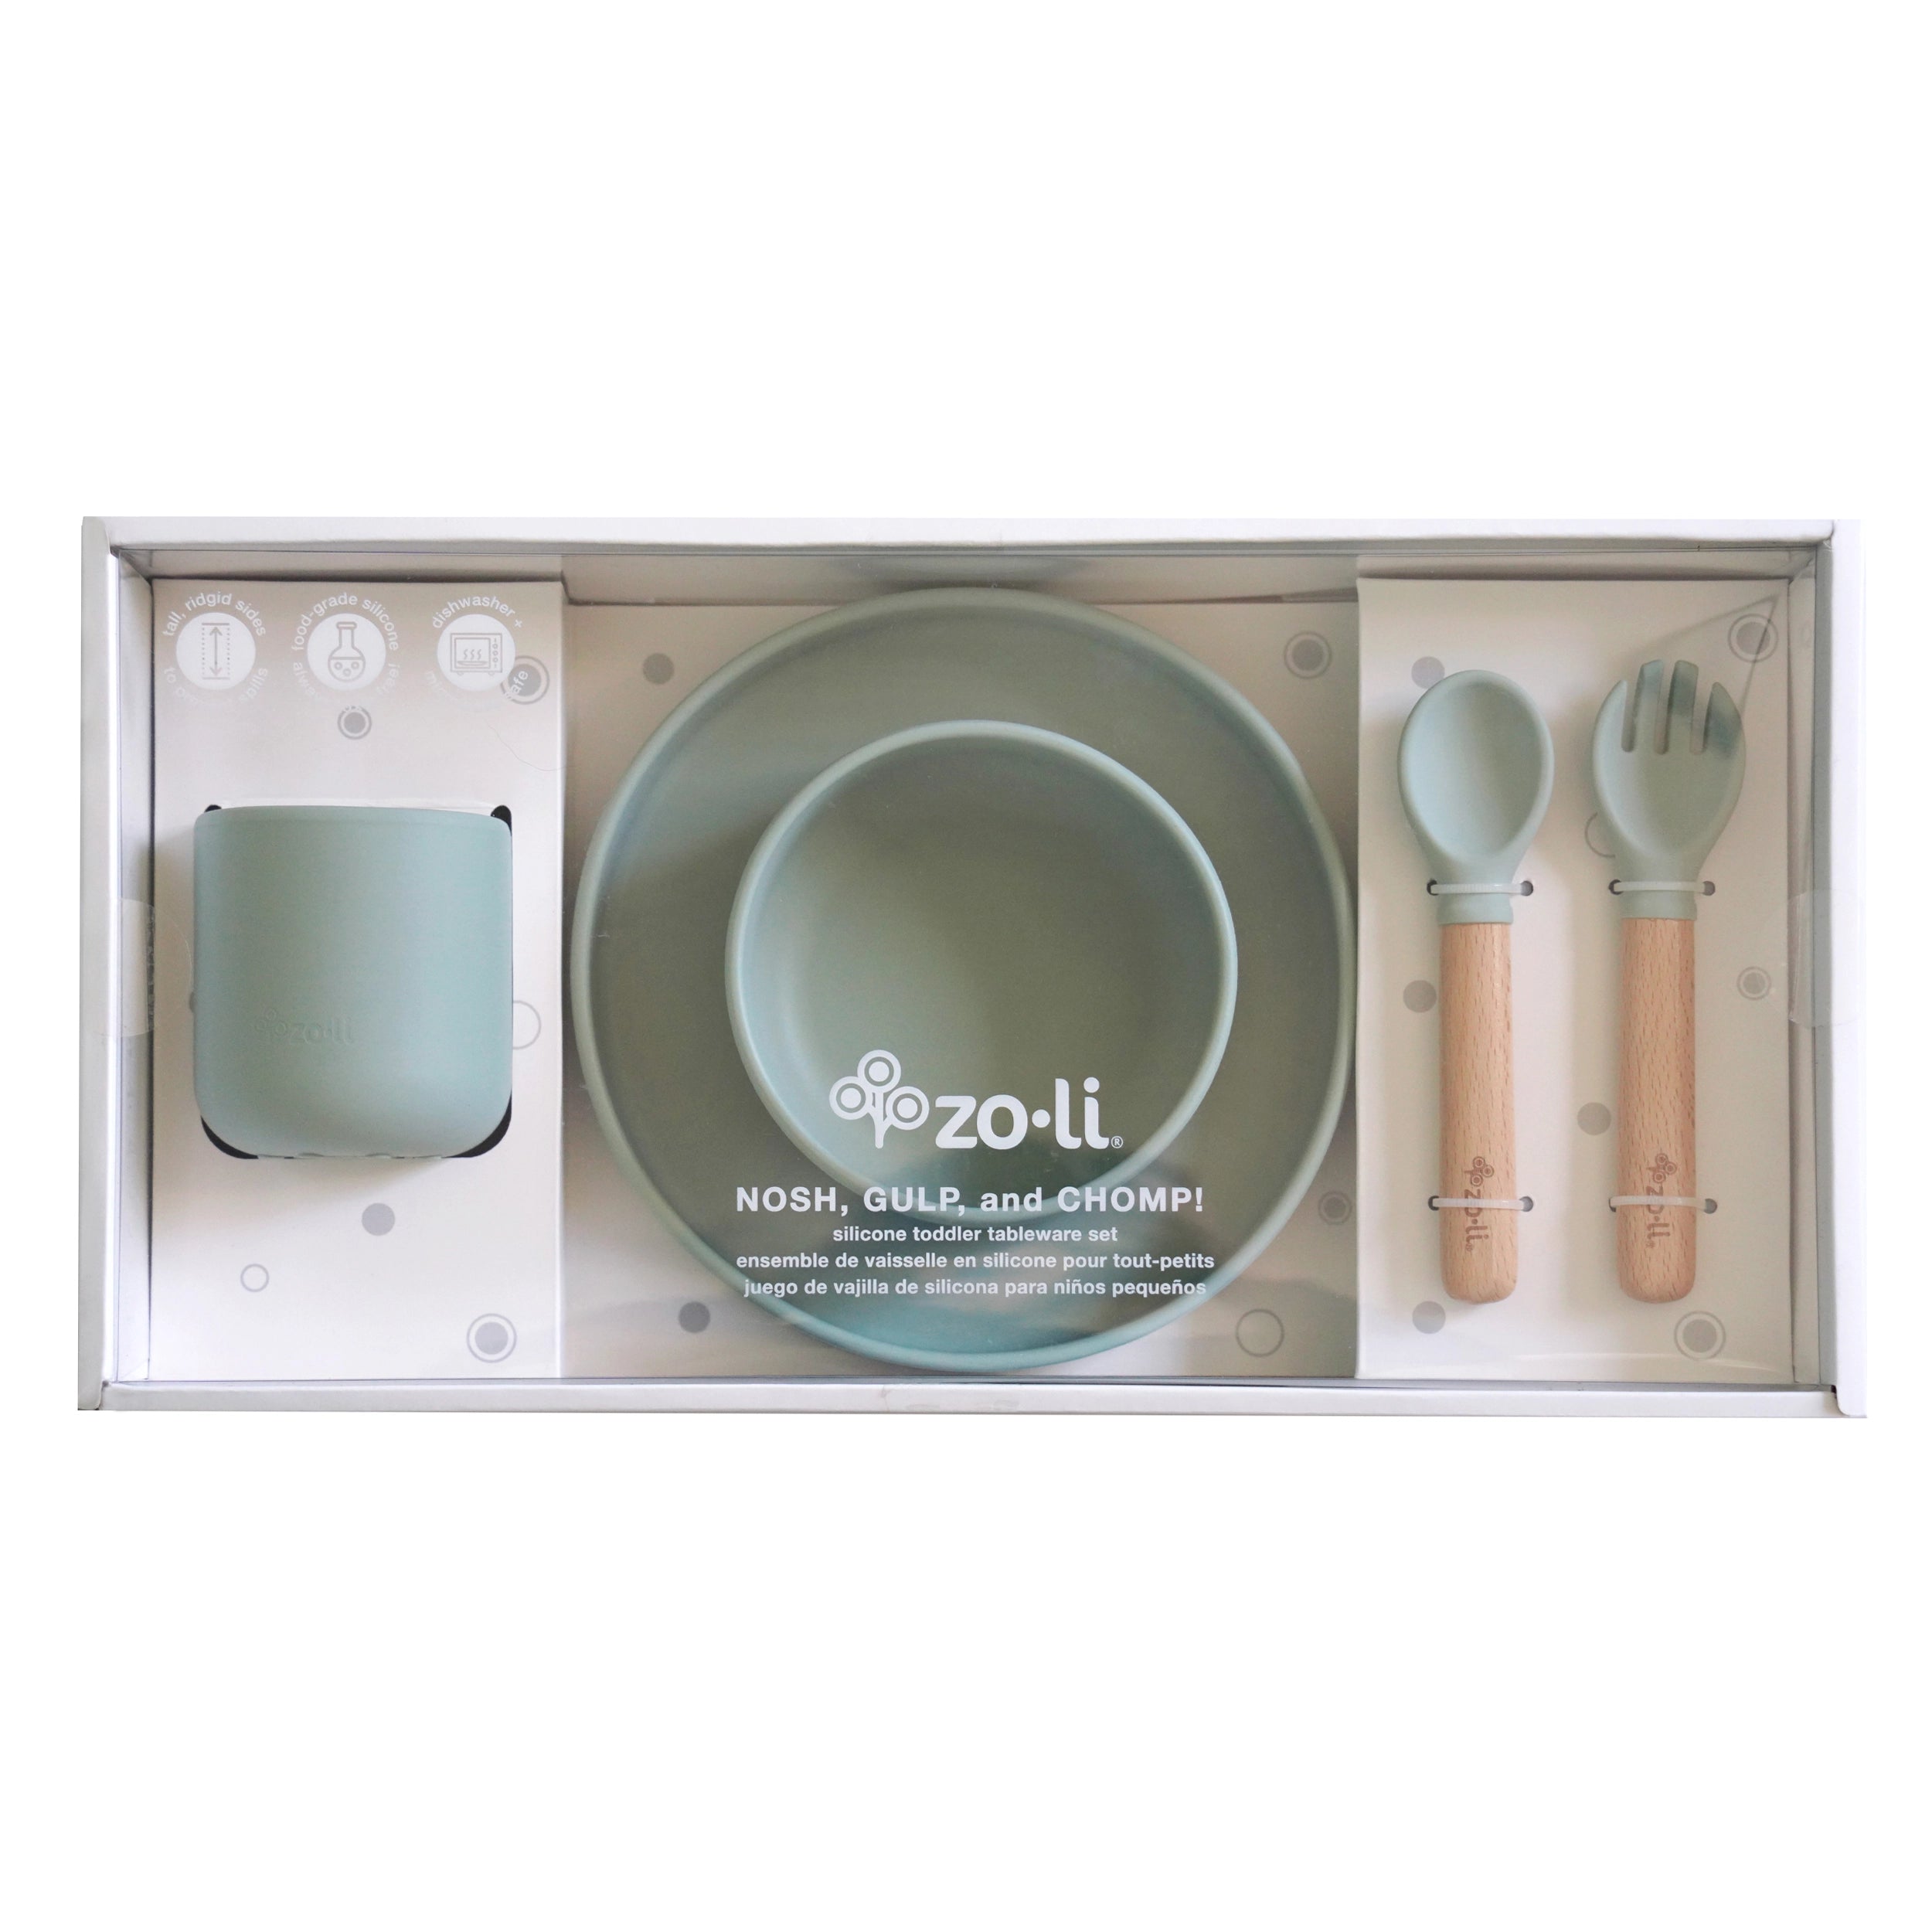 Ideal Feeding Kit Baby Silicone Feeding Tableware | CoalaHola